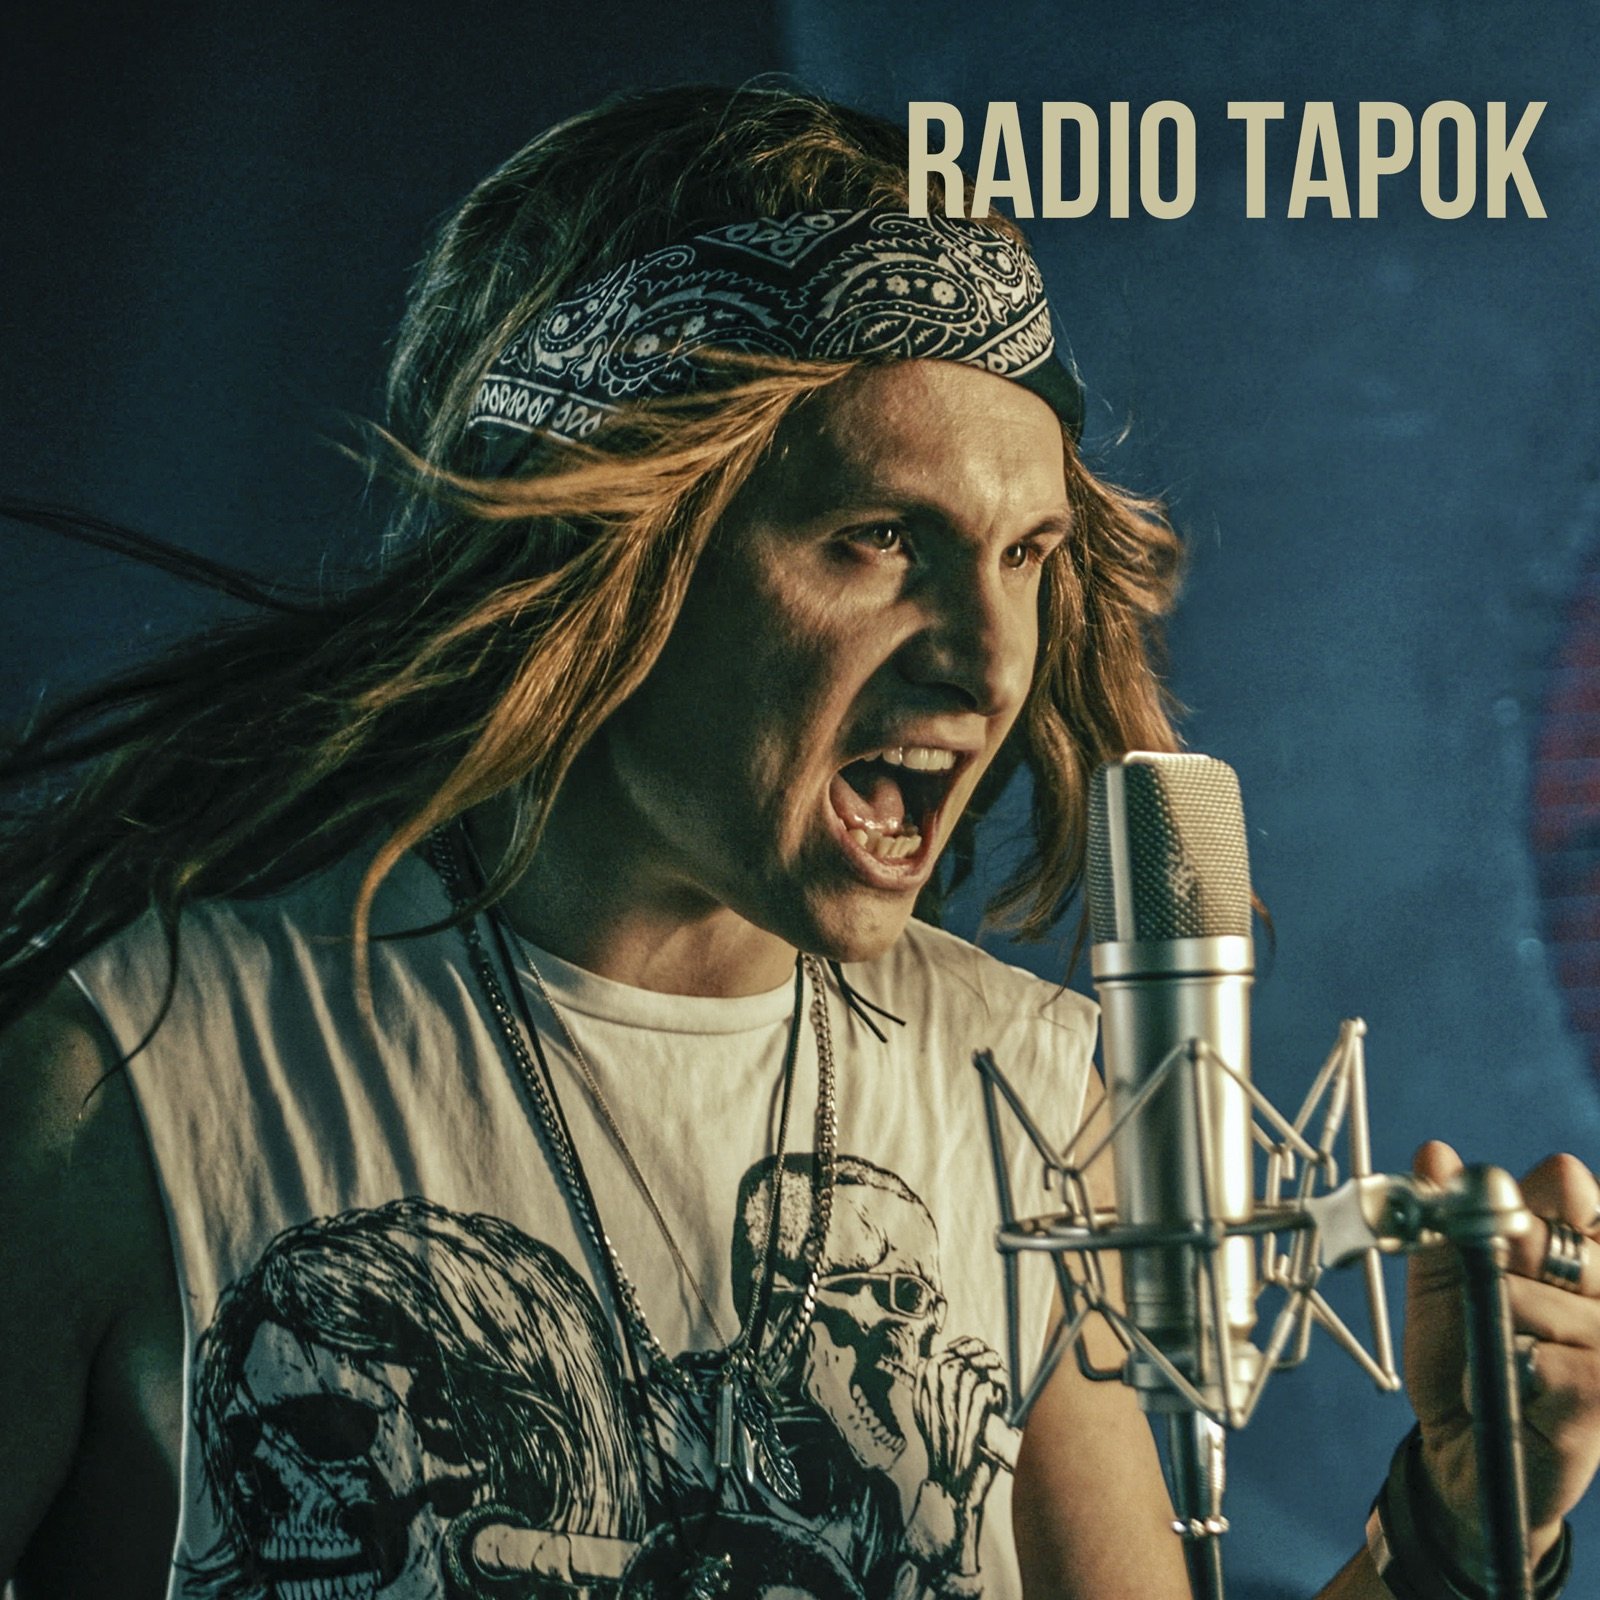 Shaman radio tapok. Radio Tapok группа. Радио тапок певец. Radio Tapok пробил час.